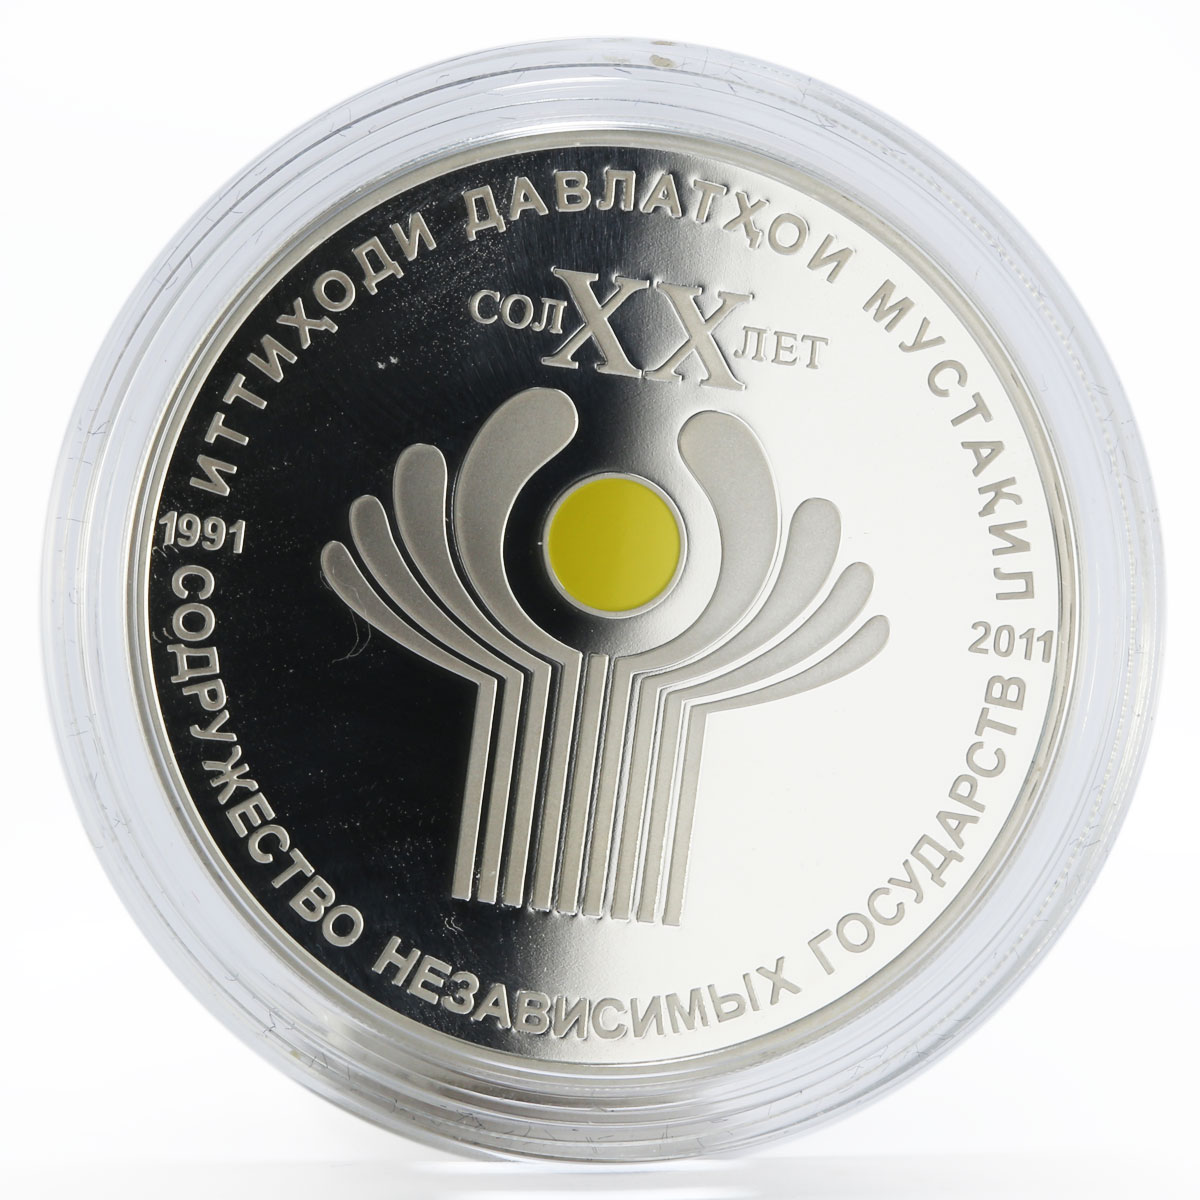 Tajikistan 100 somoni 20 years Commonwealth Independent States proof silver 2011